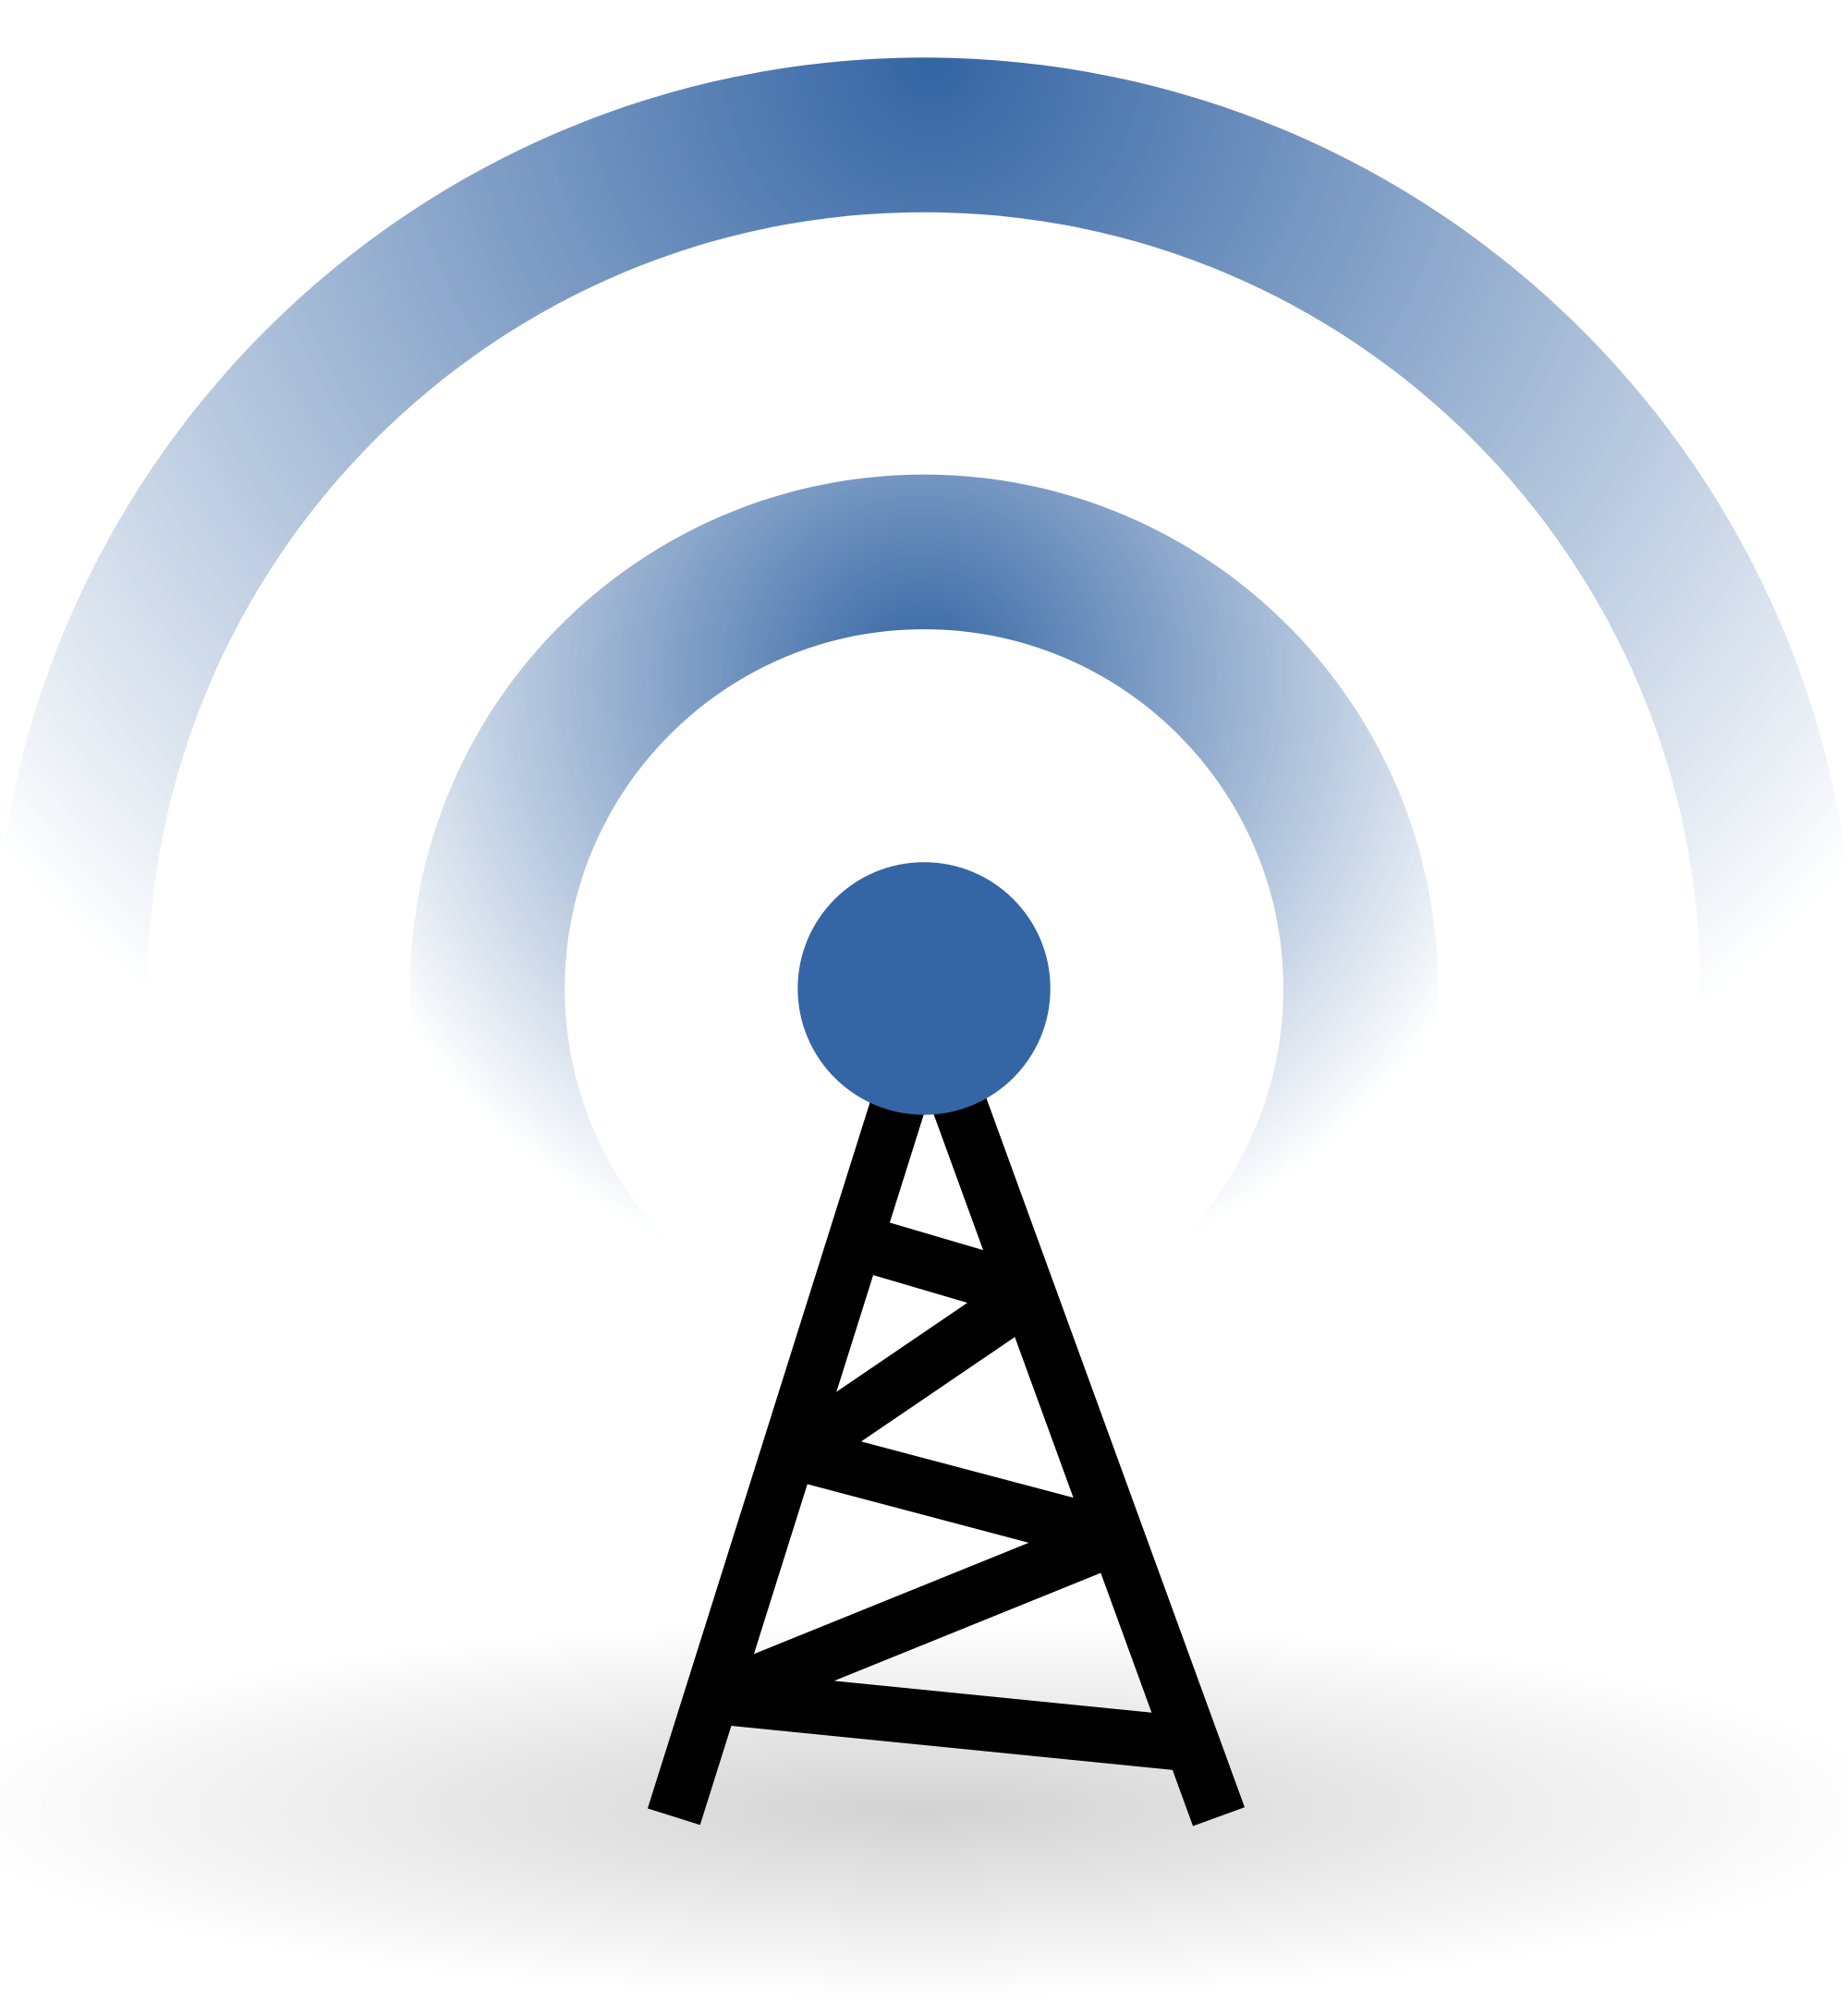 Wireless network